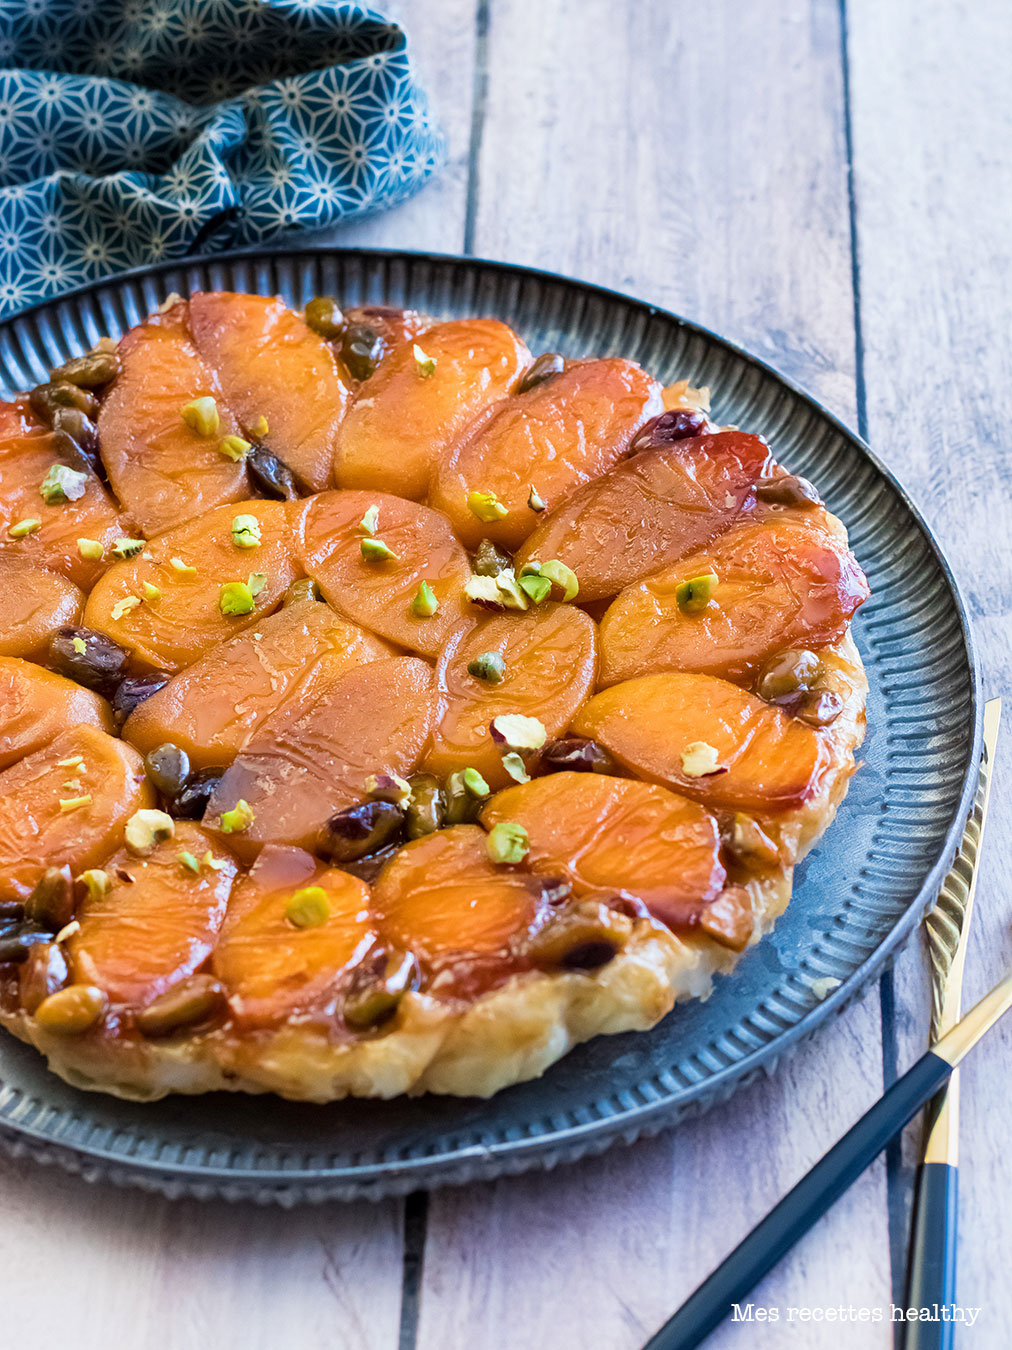 recette healthy-tarte tatin abricot